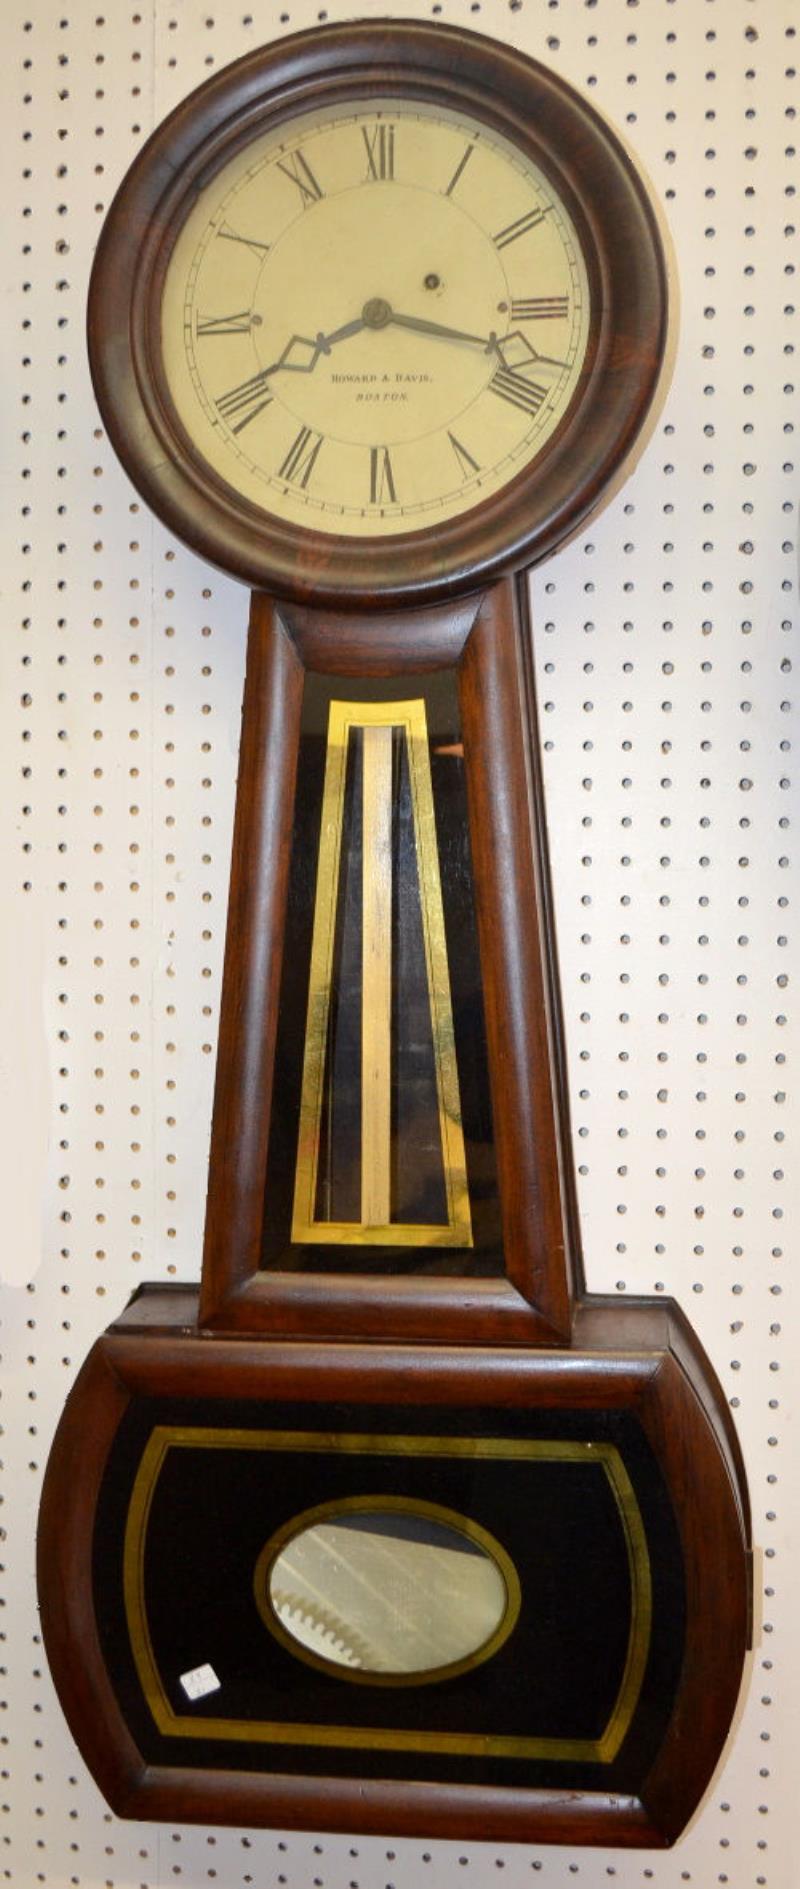 Howard & Davis No. 2 Banjo Clock